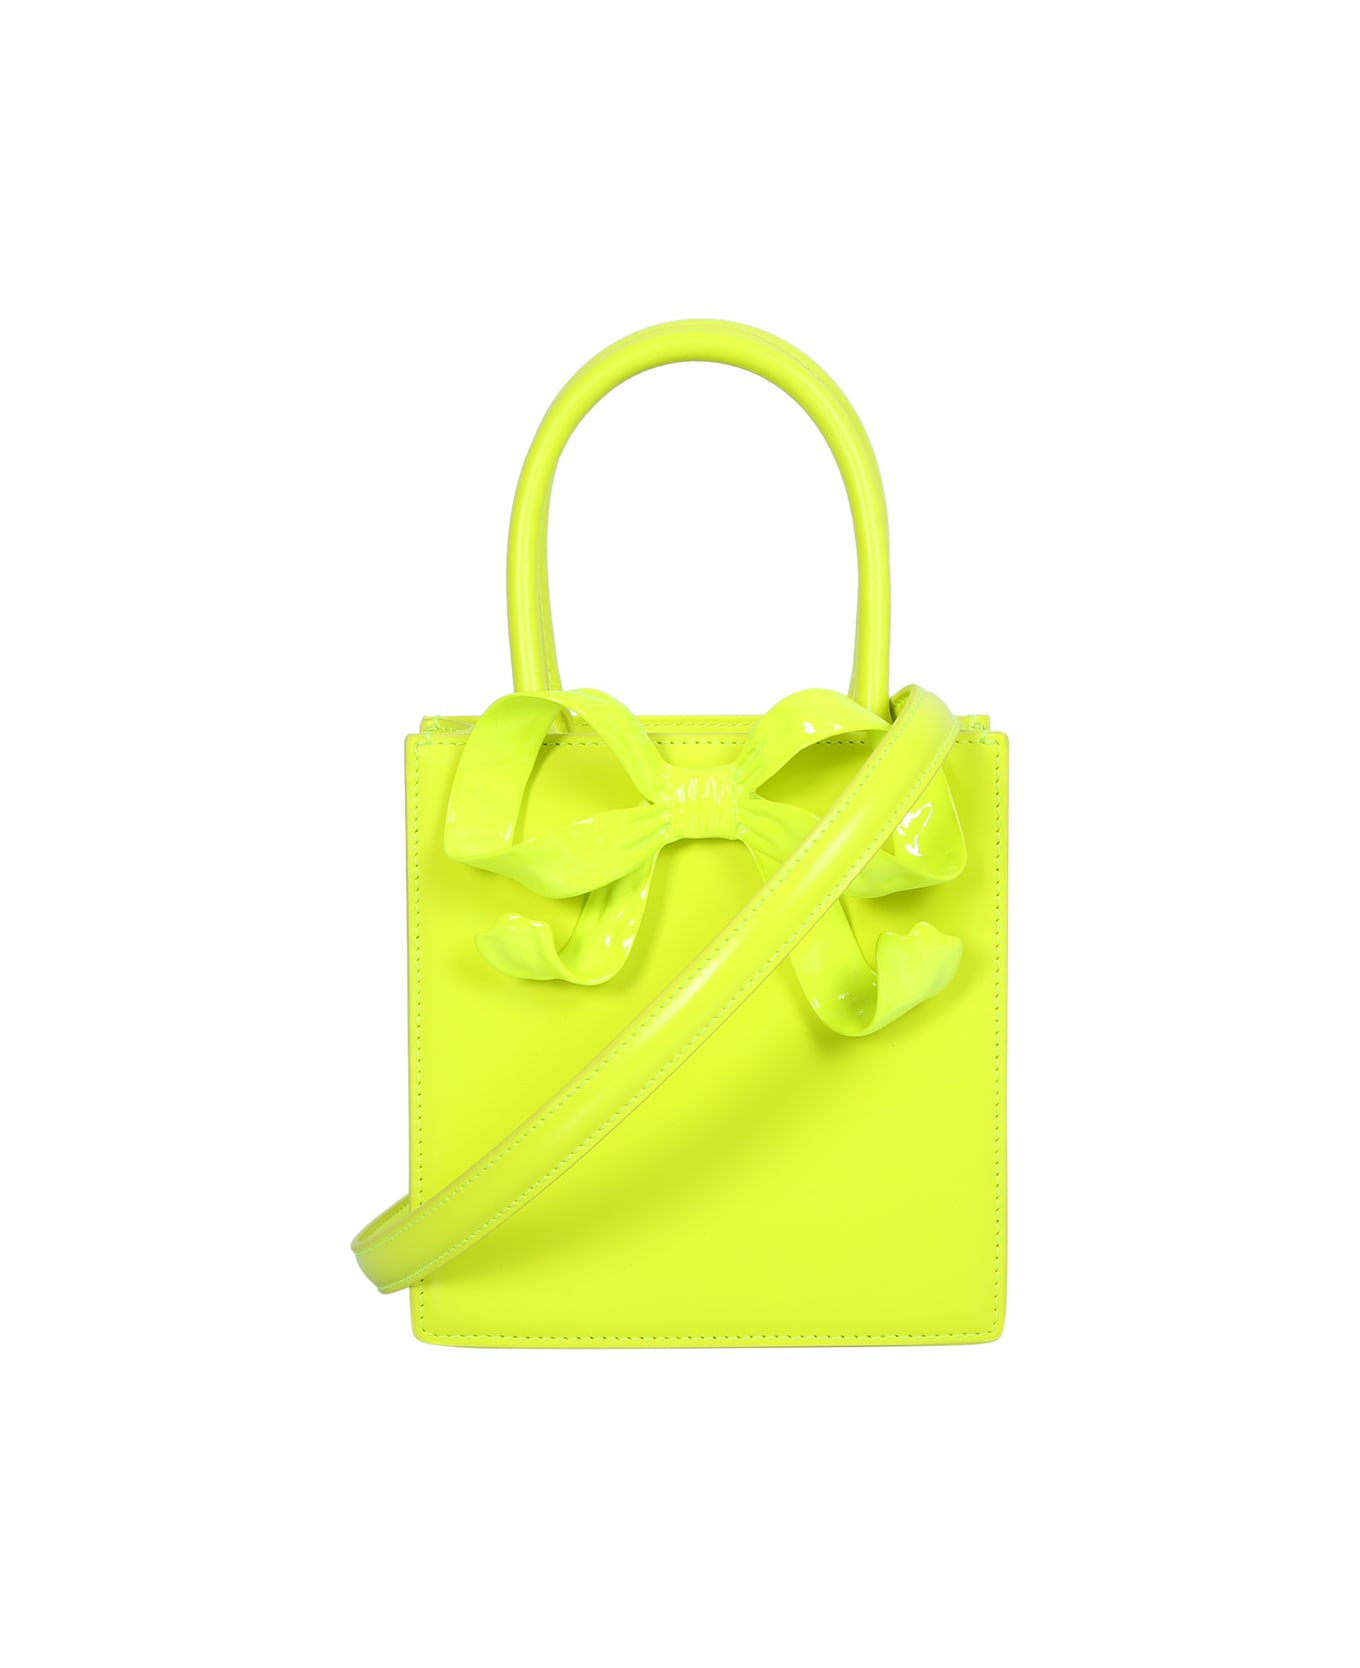 self-portrait Bow Mini Tote Neon Yellow Bag - Yellow